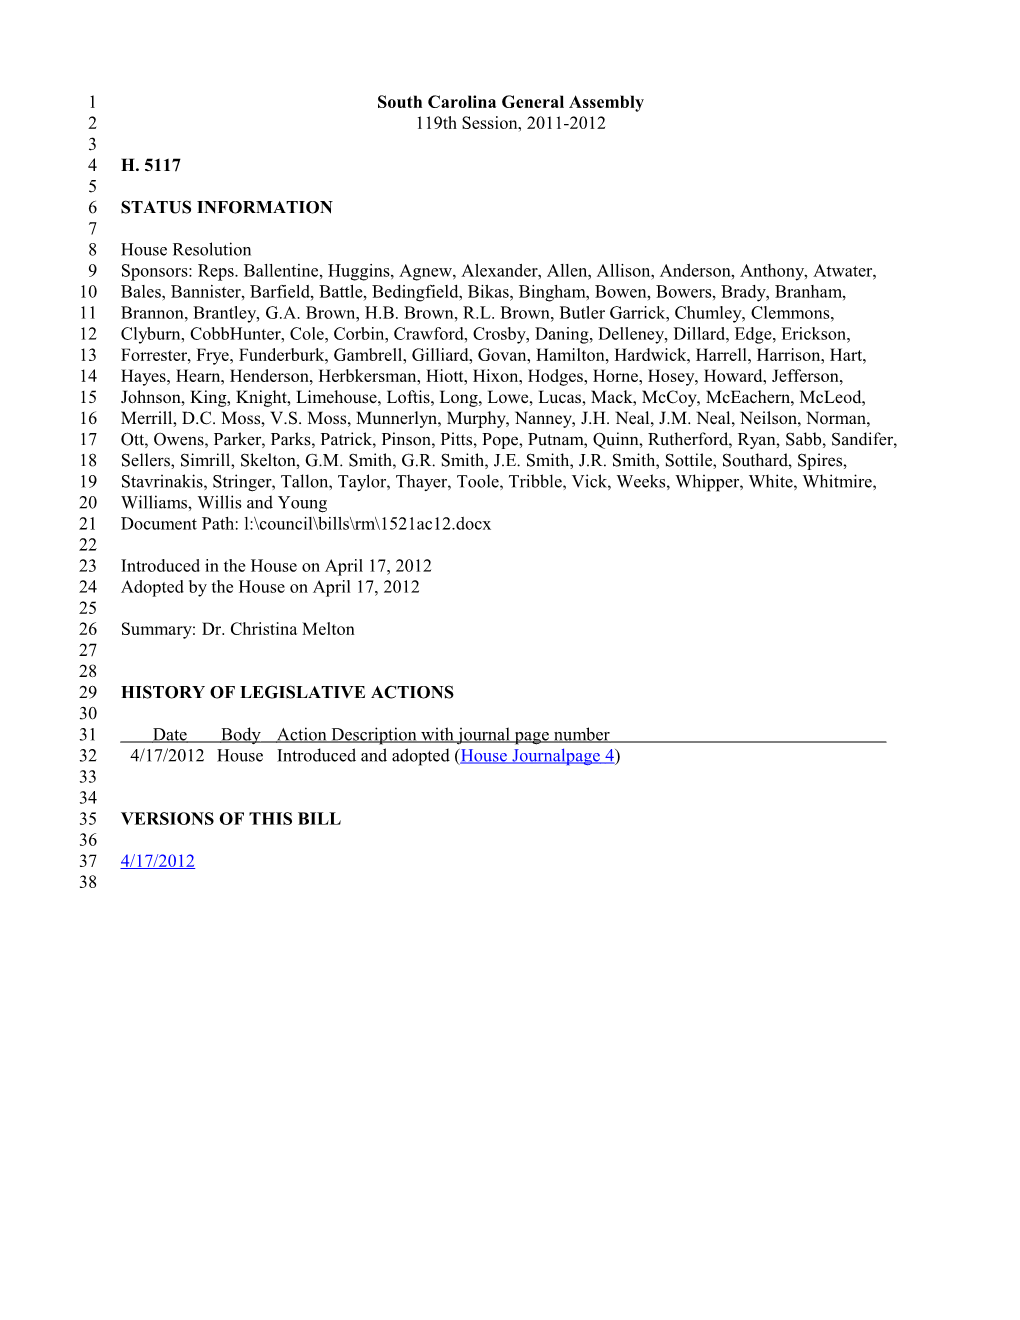 2011-2012 Bill 5117: Dr. Christina Melton - South Carolina Legislature Online